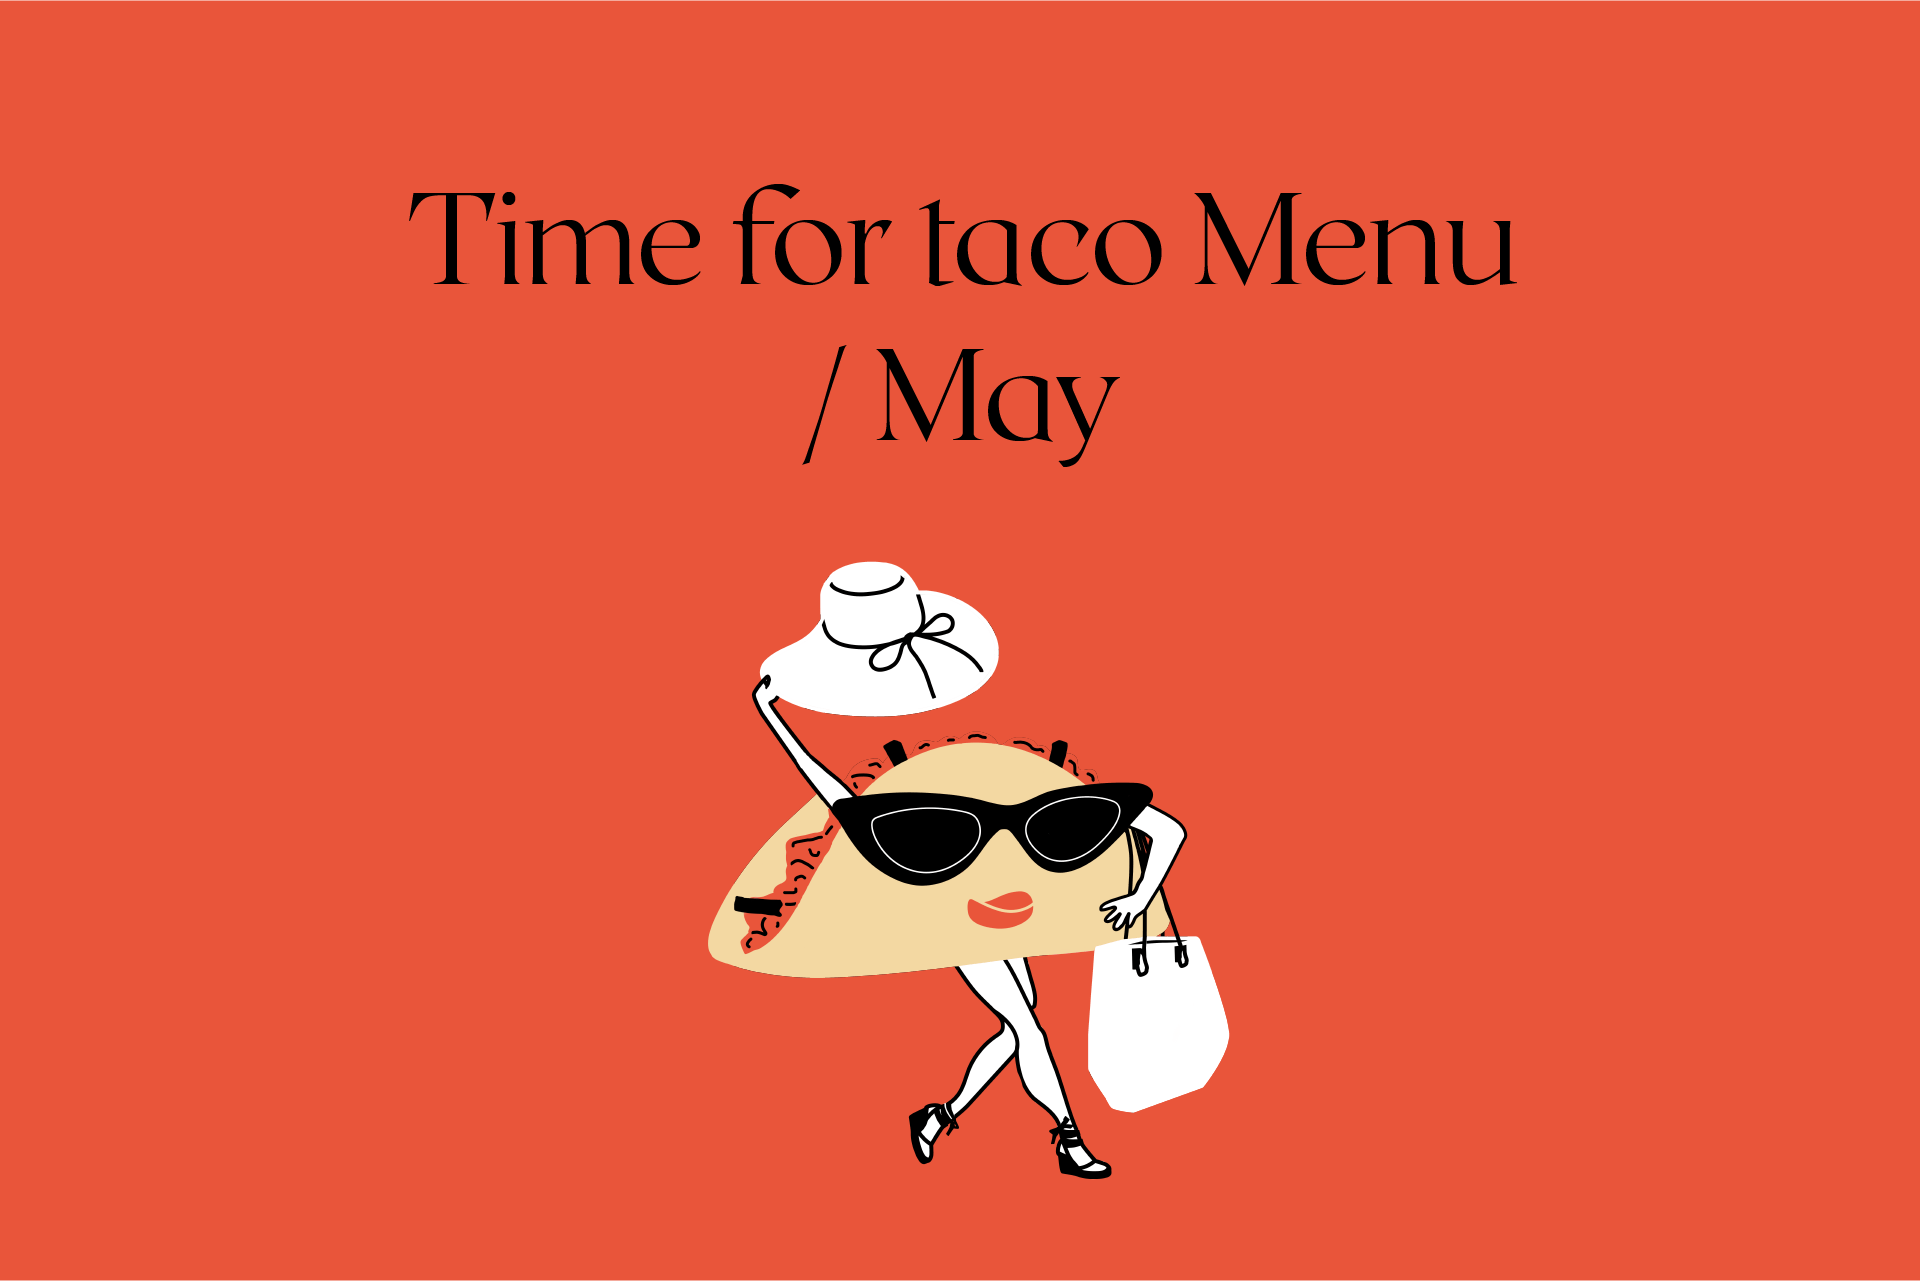 Time for taco Menu / May